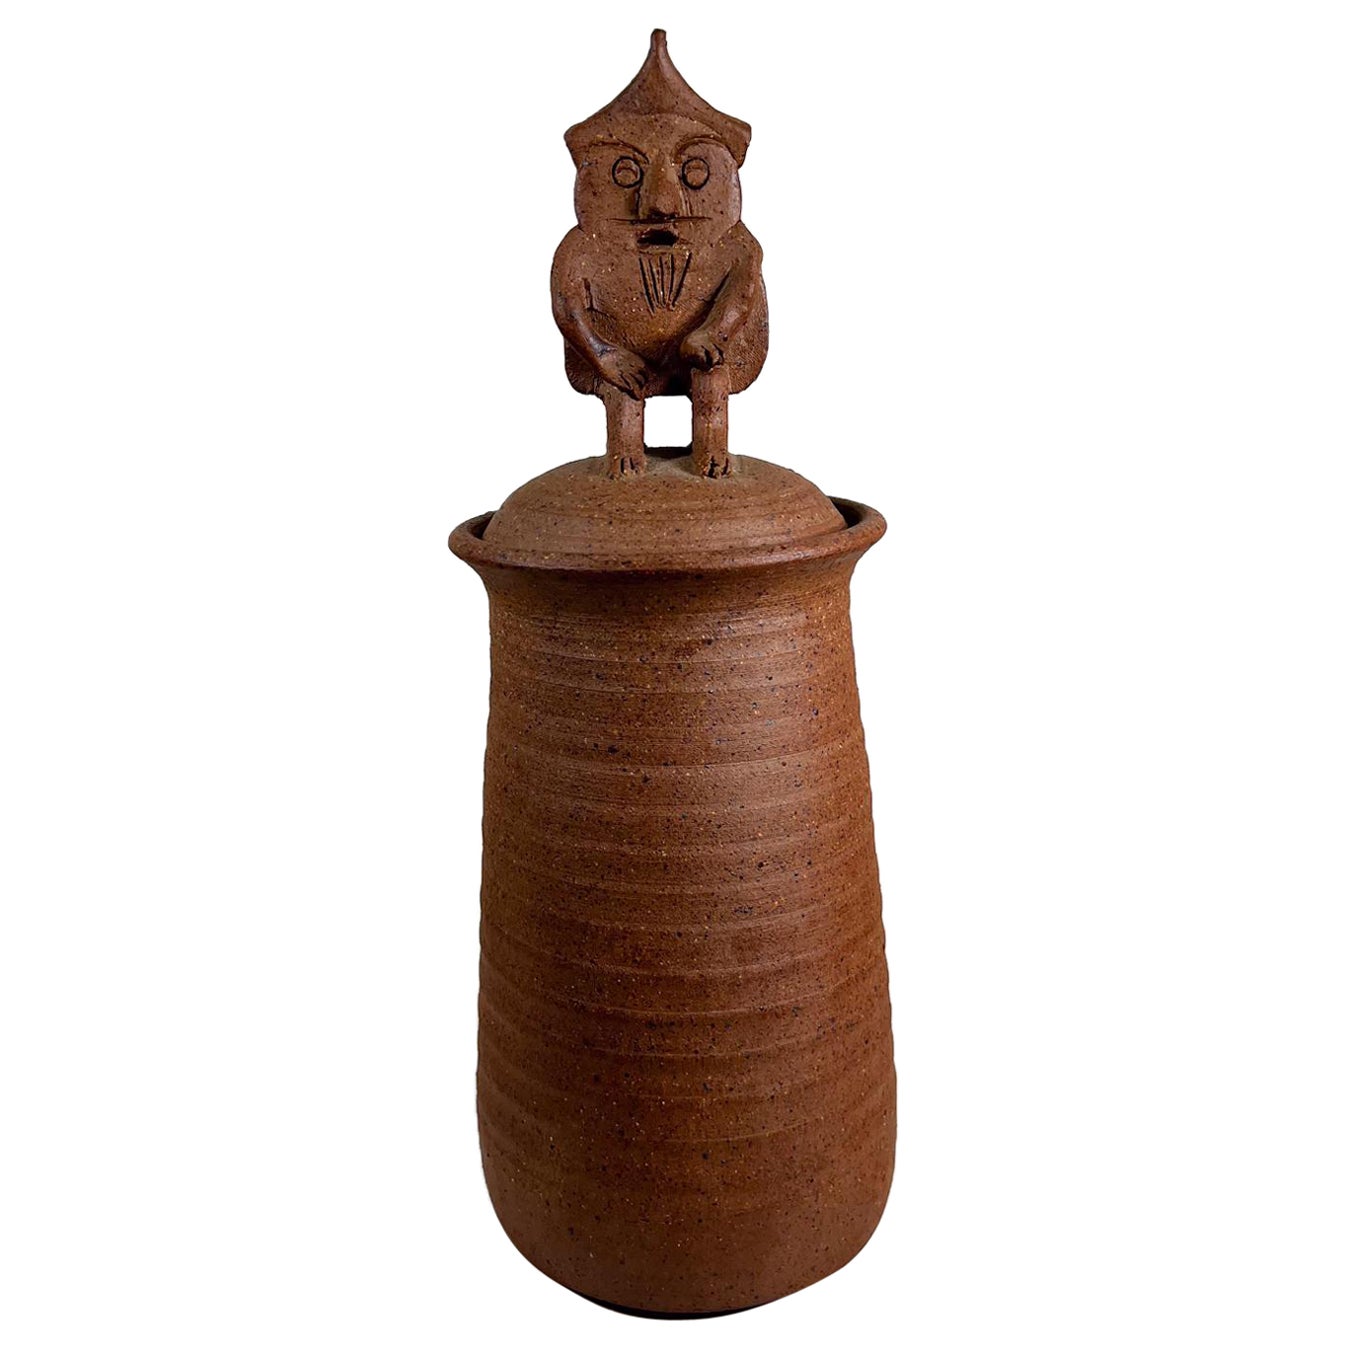 1950s Modernist Owl Wise Stash Jar Stoneware Art Pottery